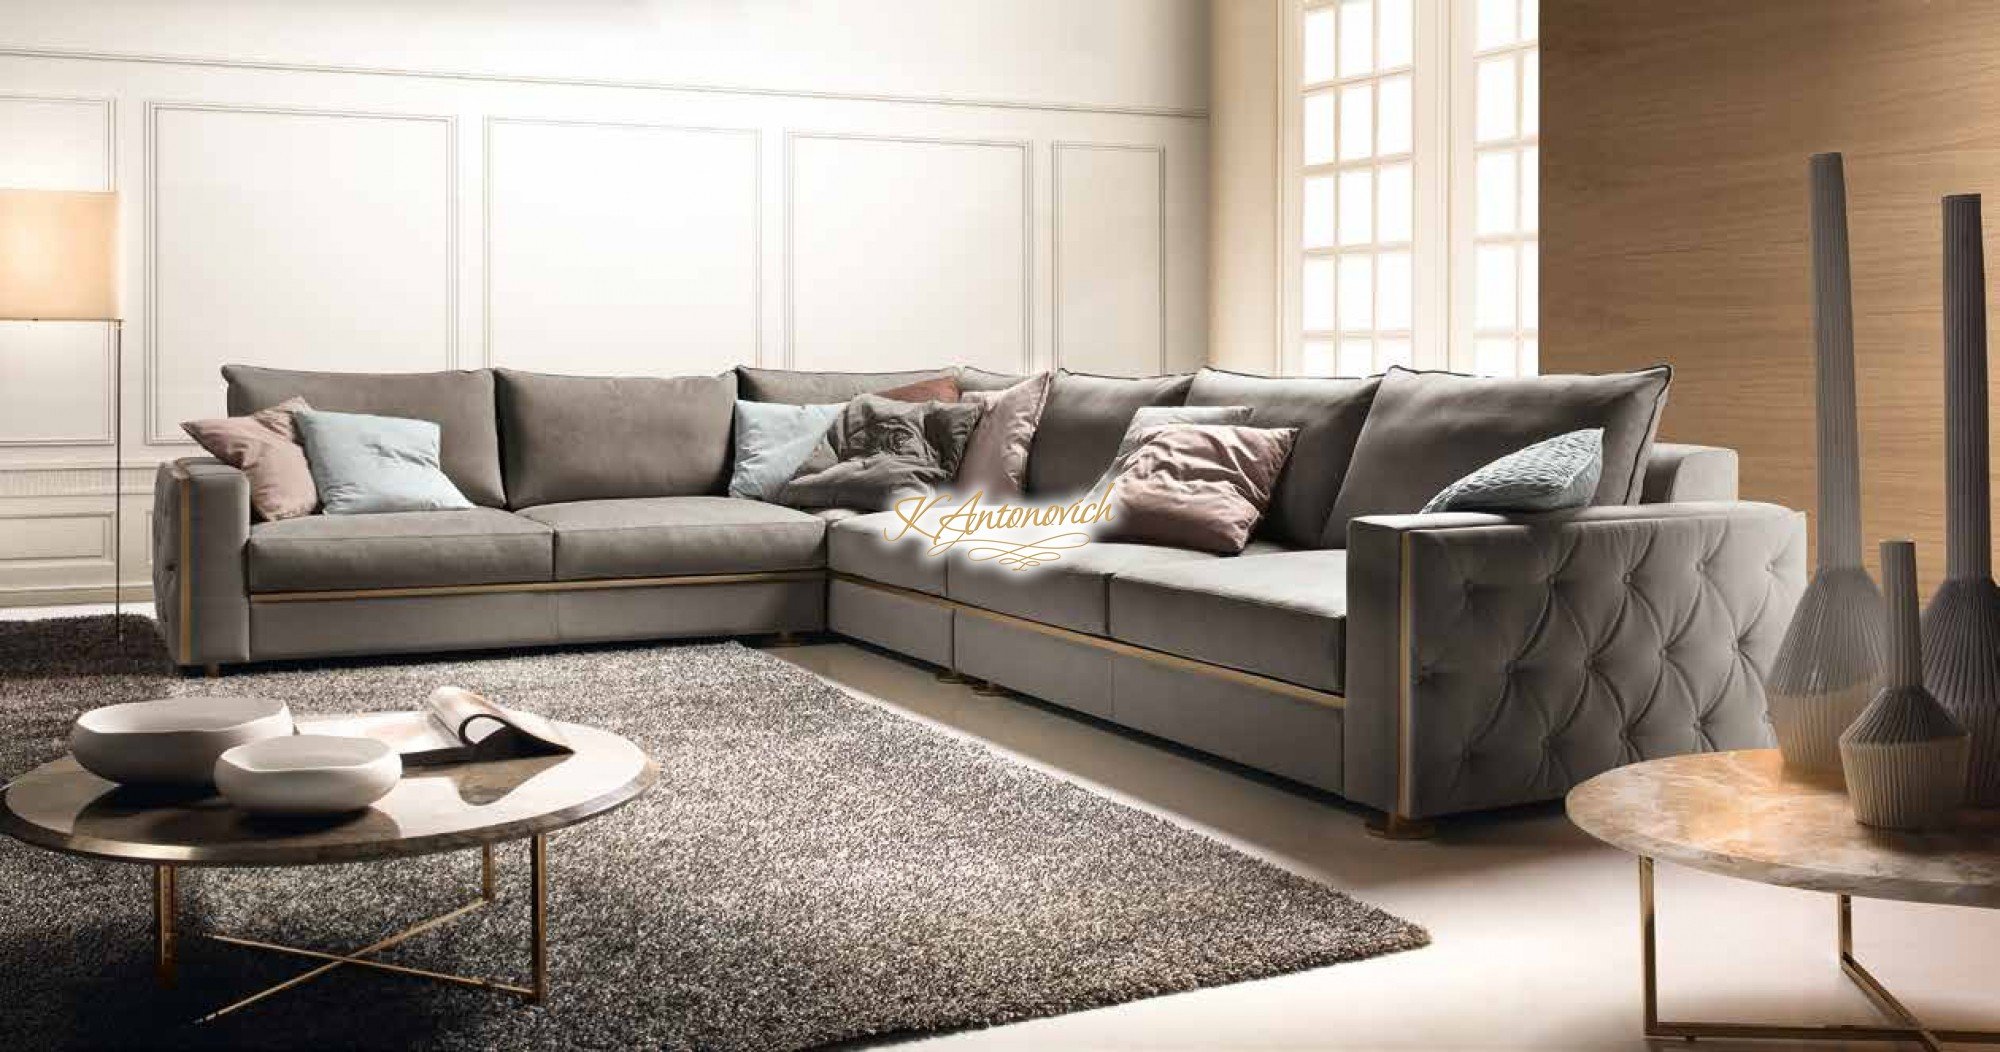 Modern italian living room furniture luxury interior